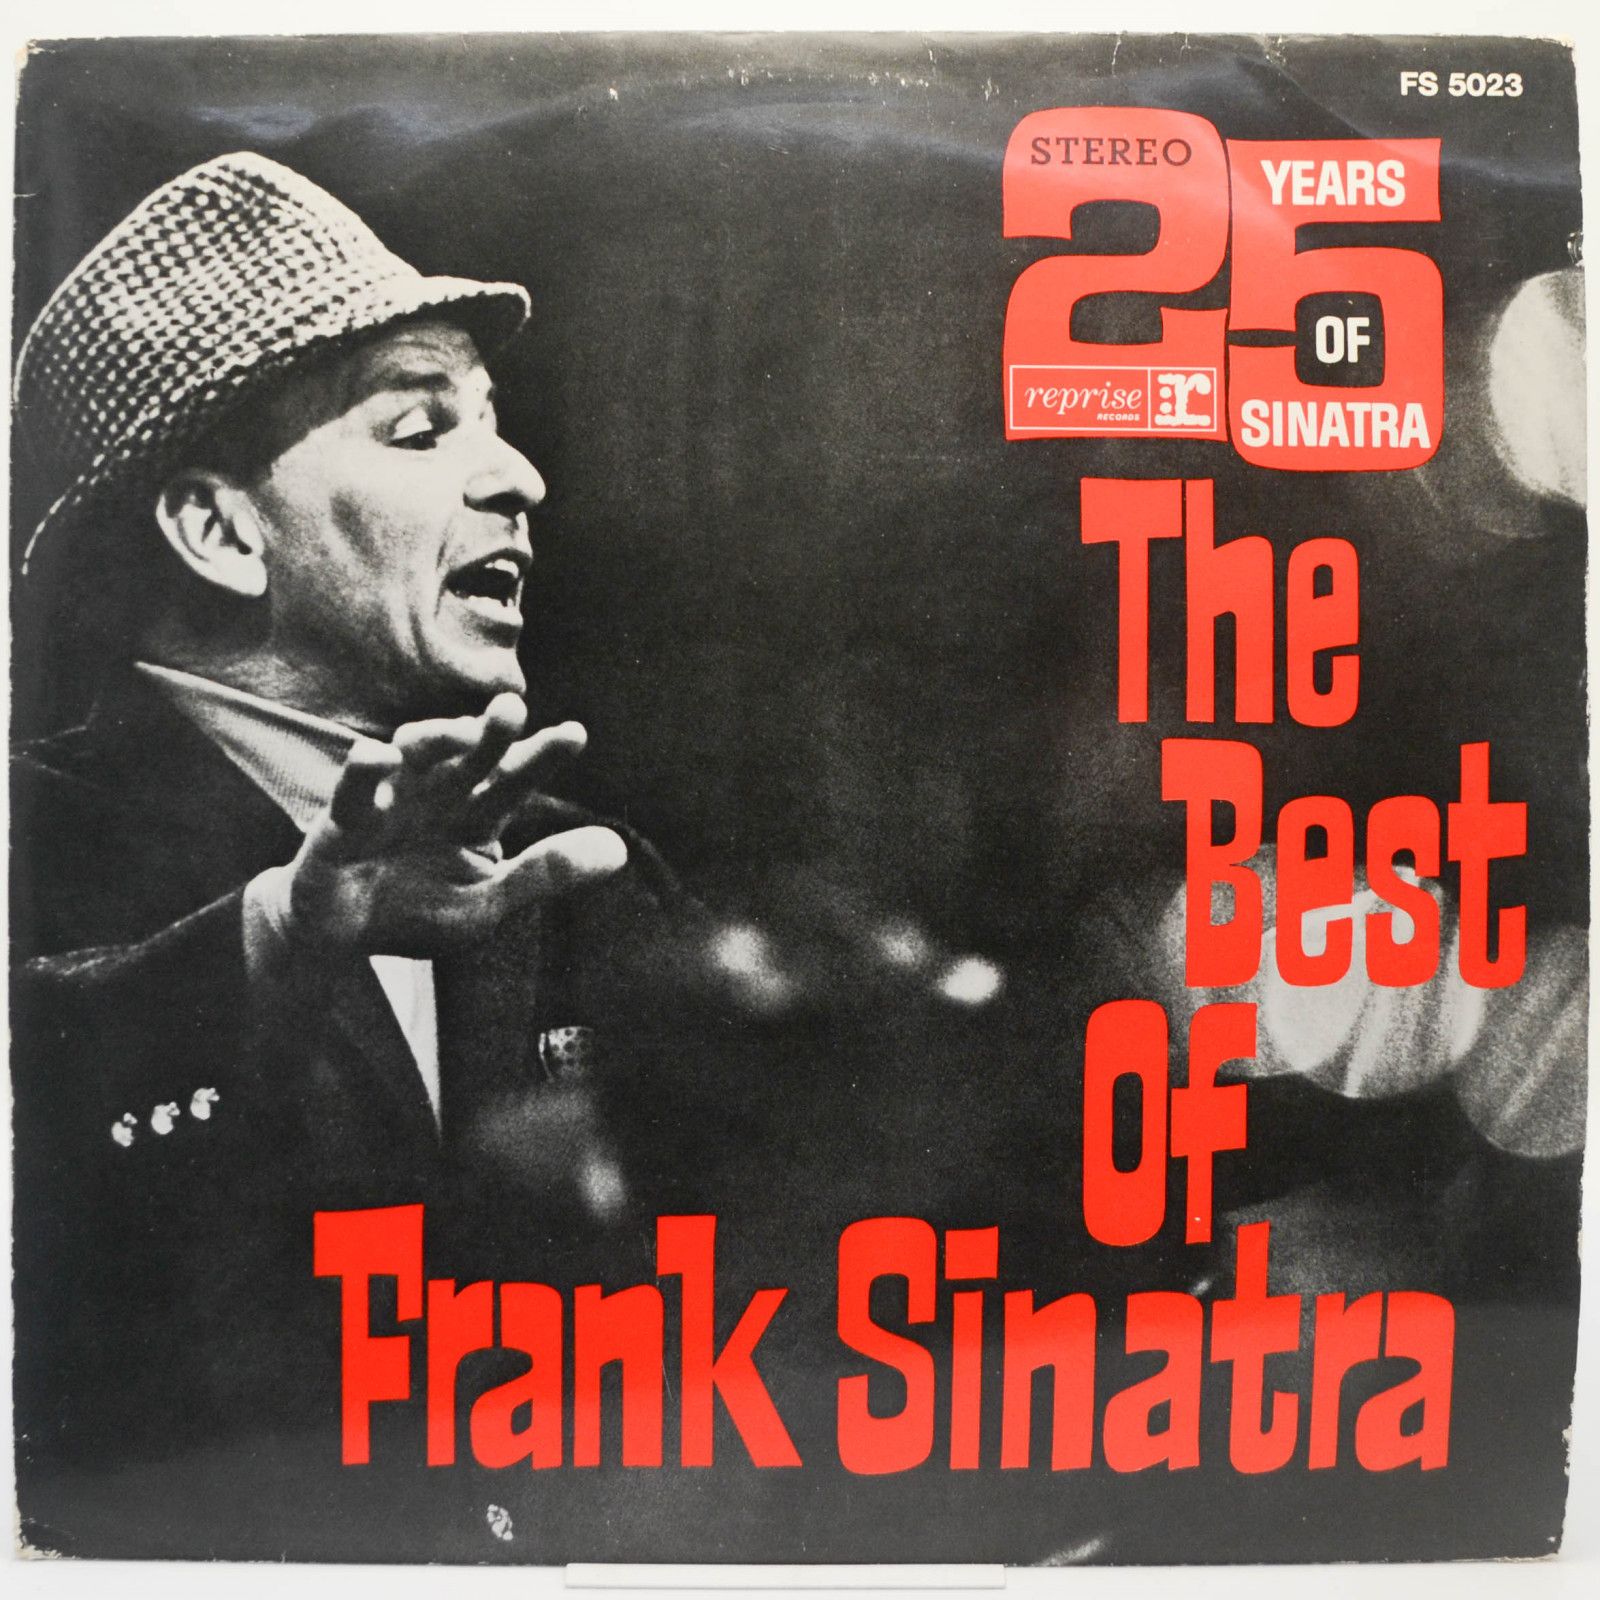 Frank Sinatra — 25 Years Of Sinatra - The Best Of Frank Sinatra, 1967